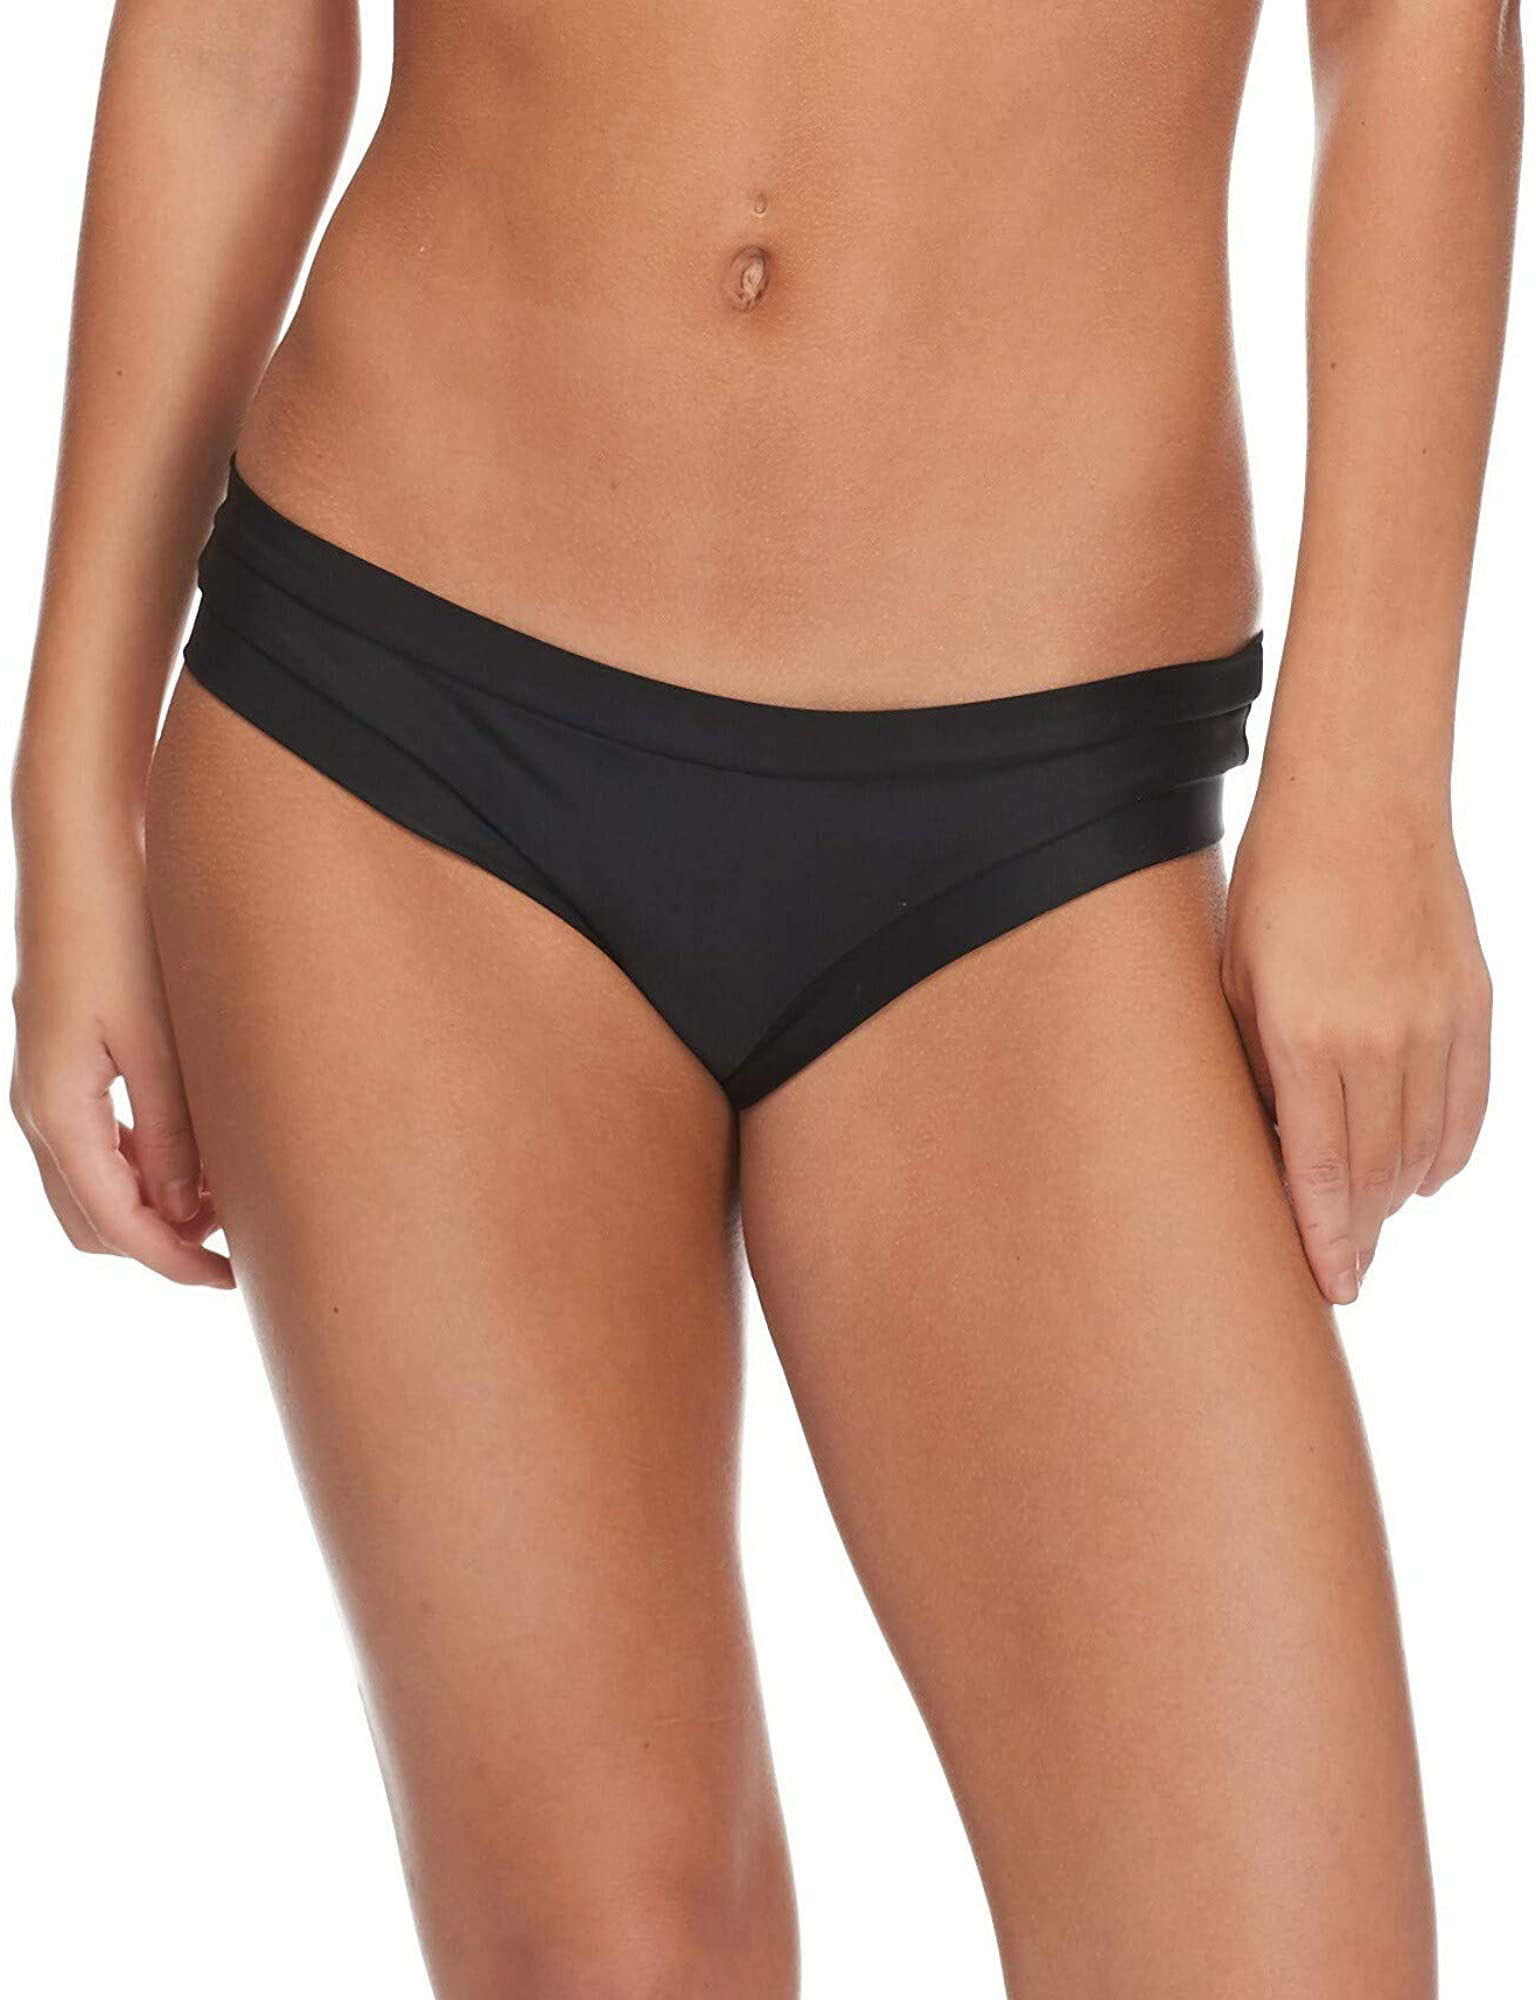 Body Glove Women's Standard Smoothies Audrey Solid Low Rise Bikini Bottom Swimsuit 